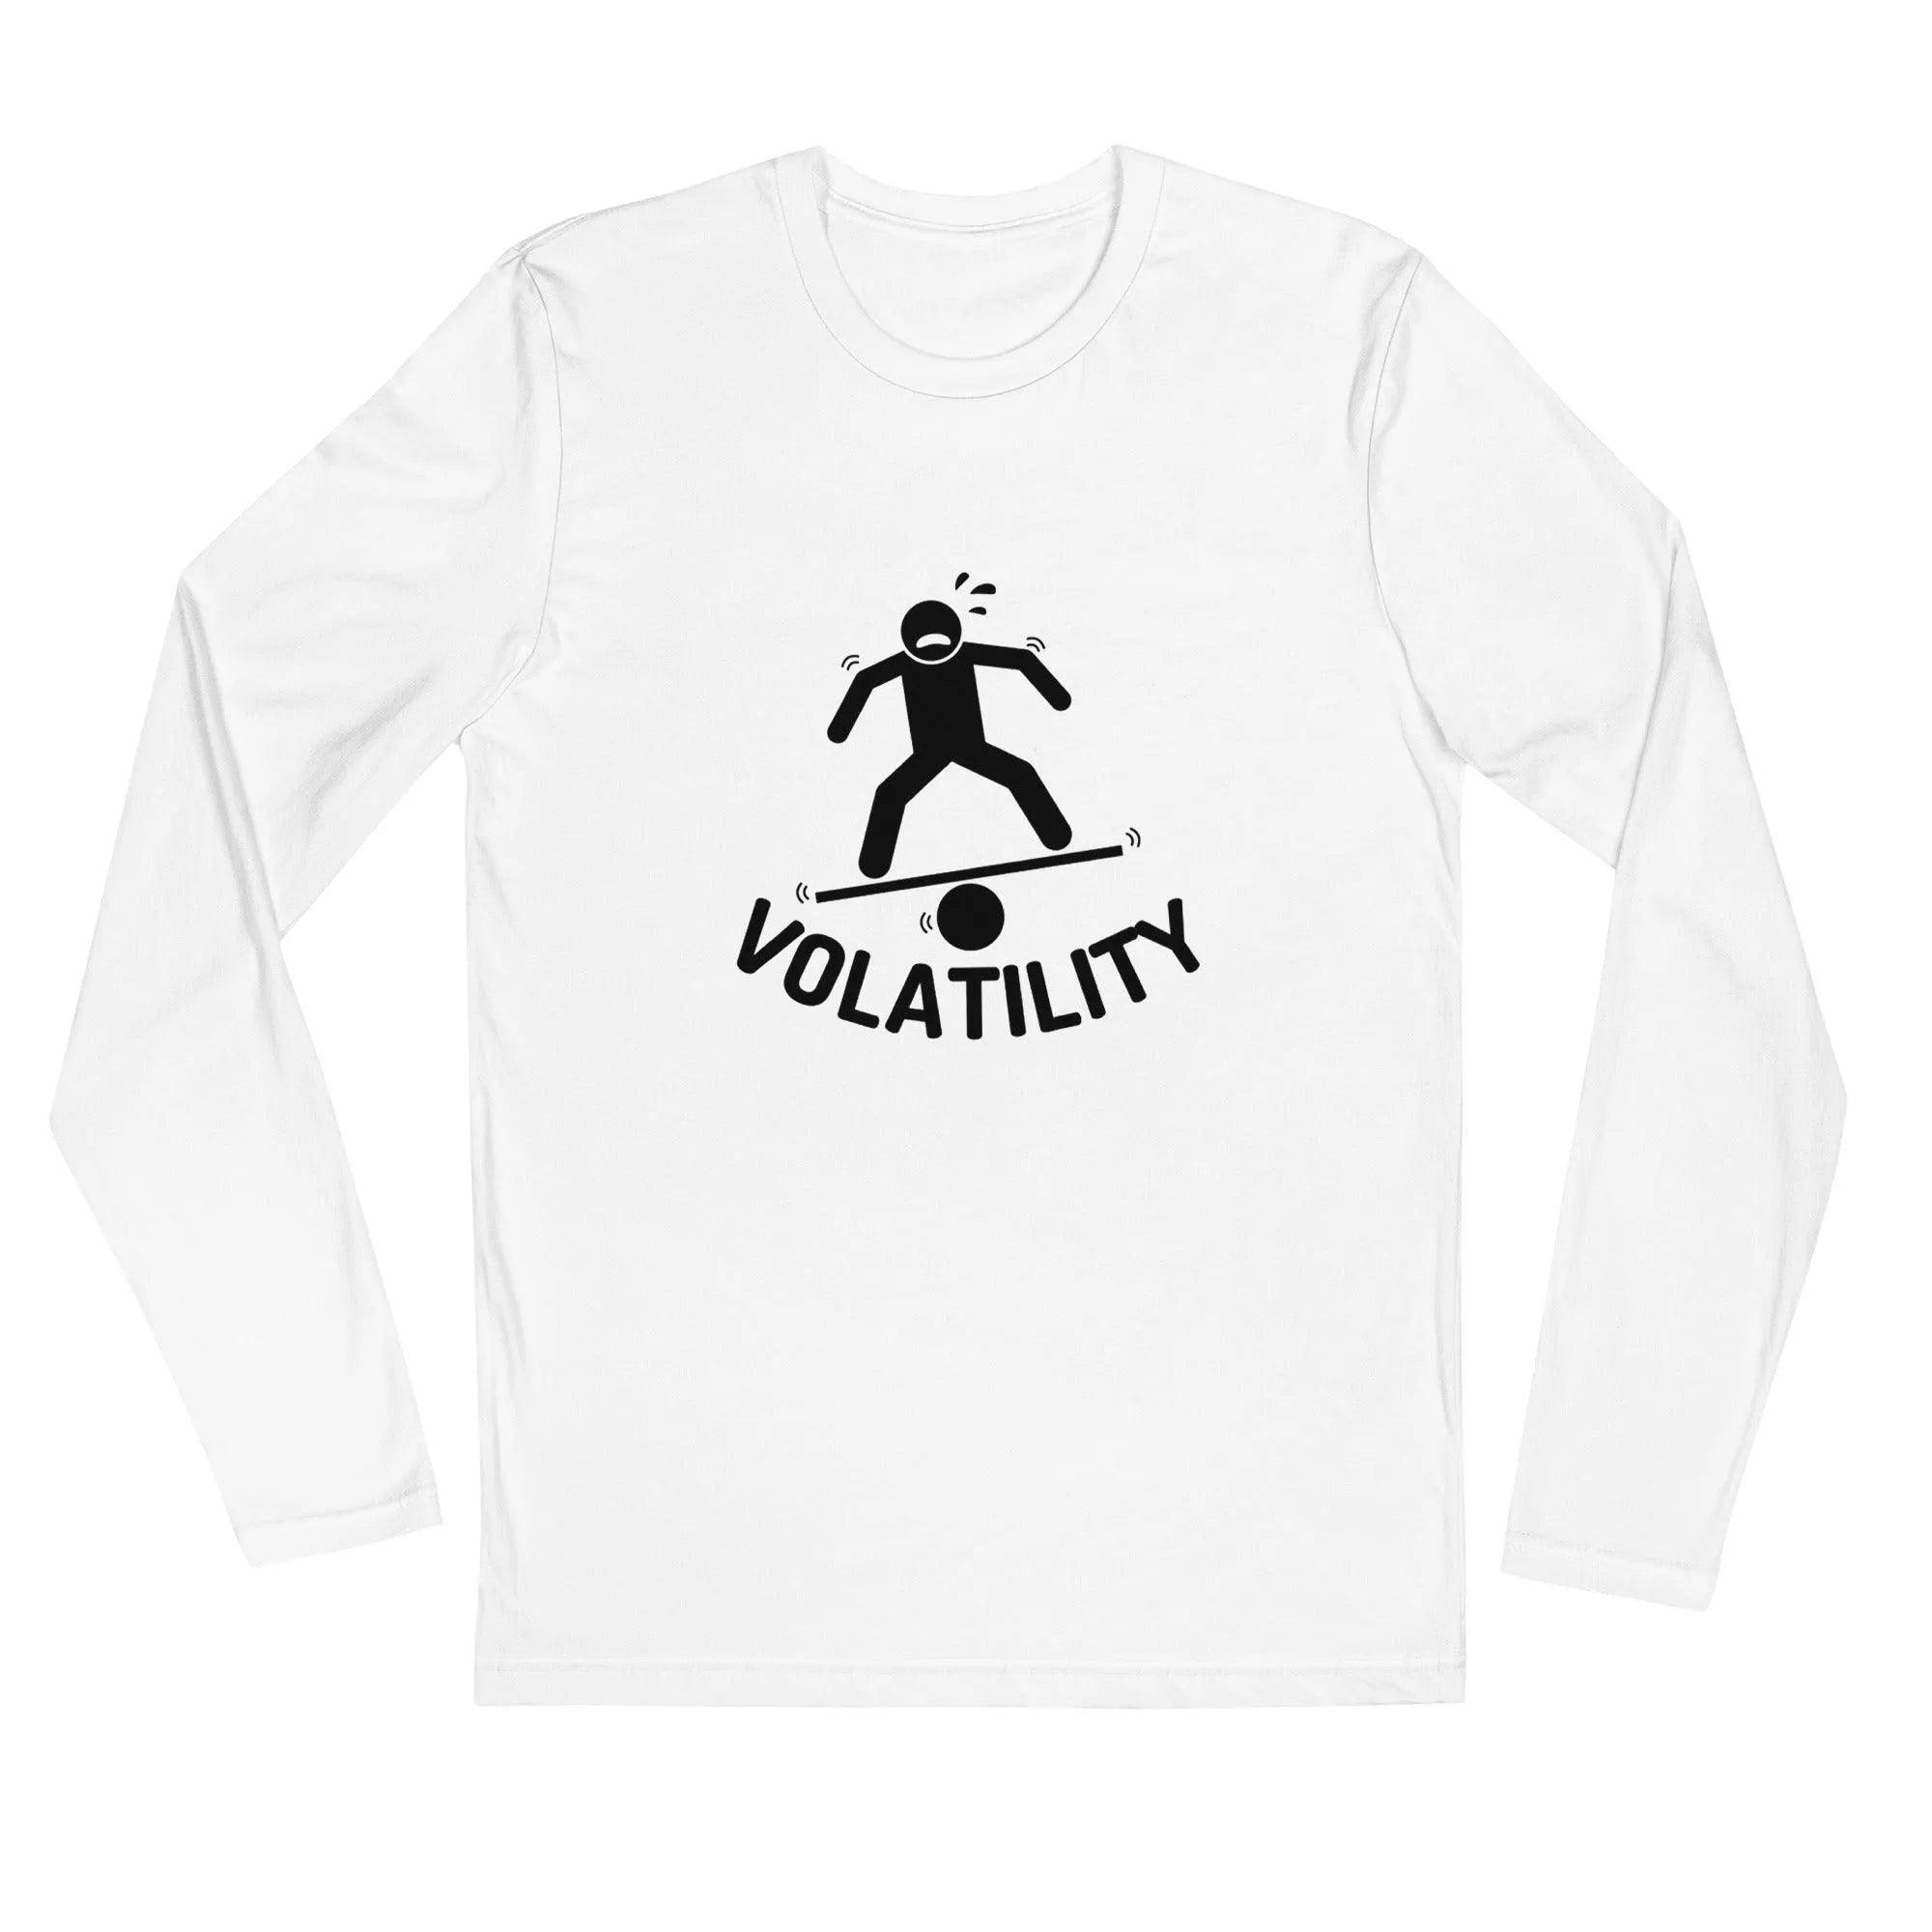 Volatility-LS Long Sleeve T-Shirt - InvestmenTees